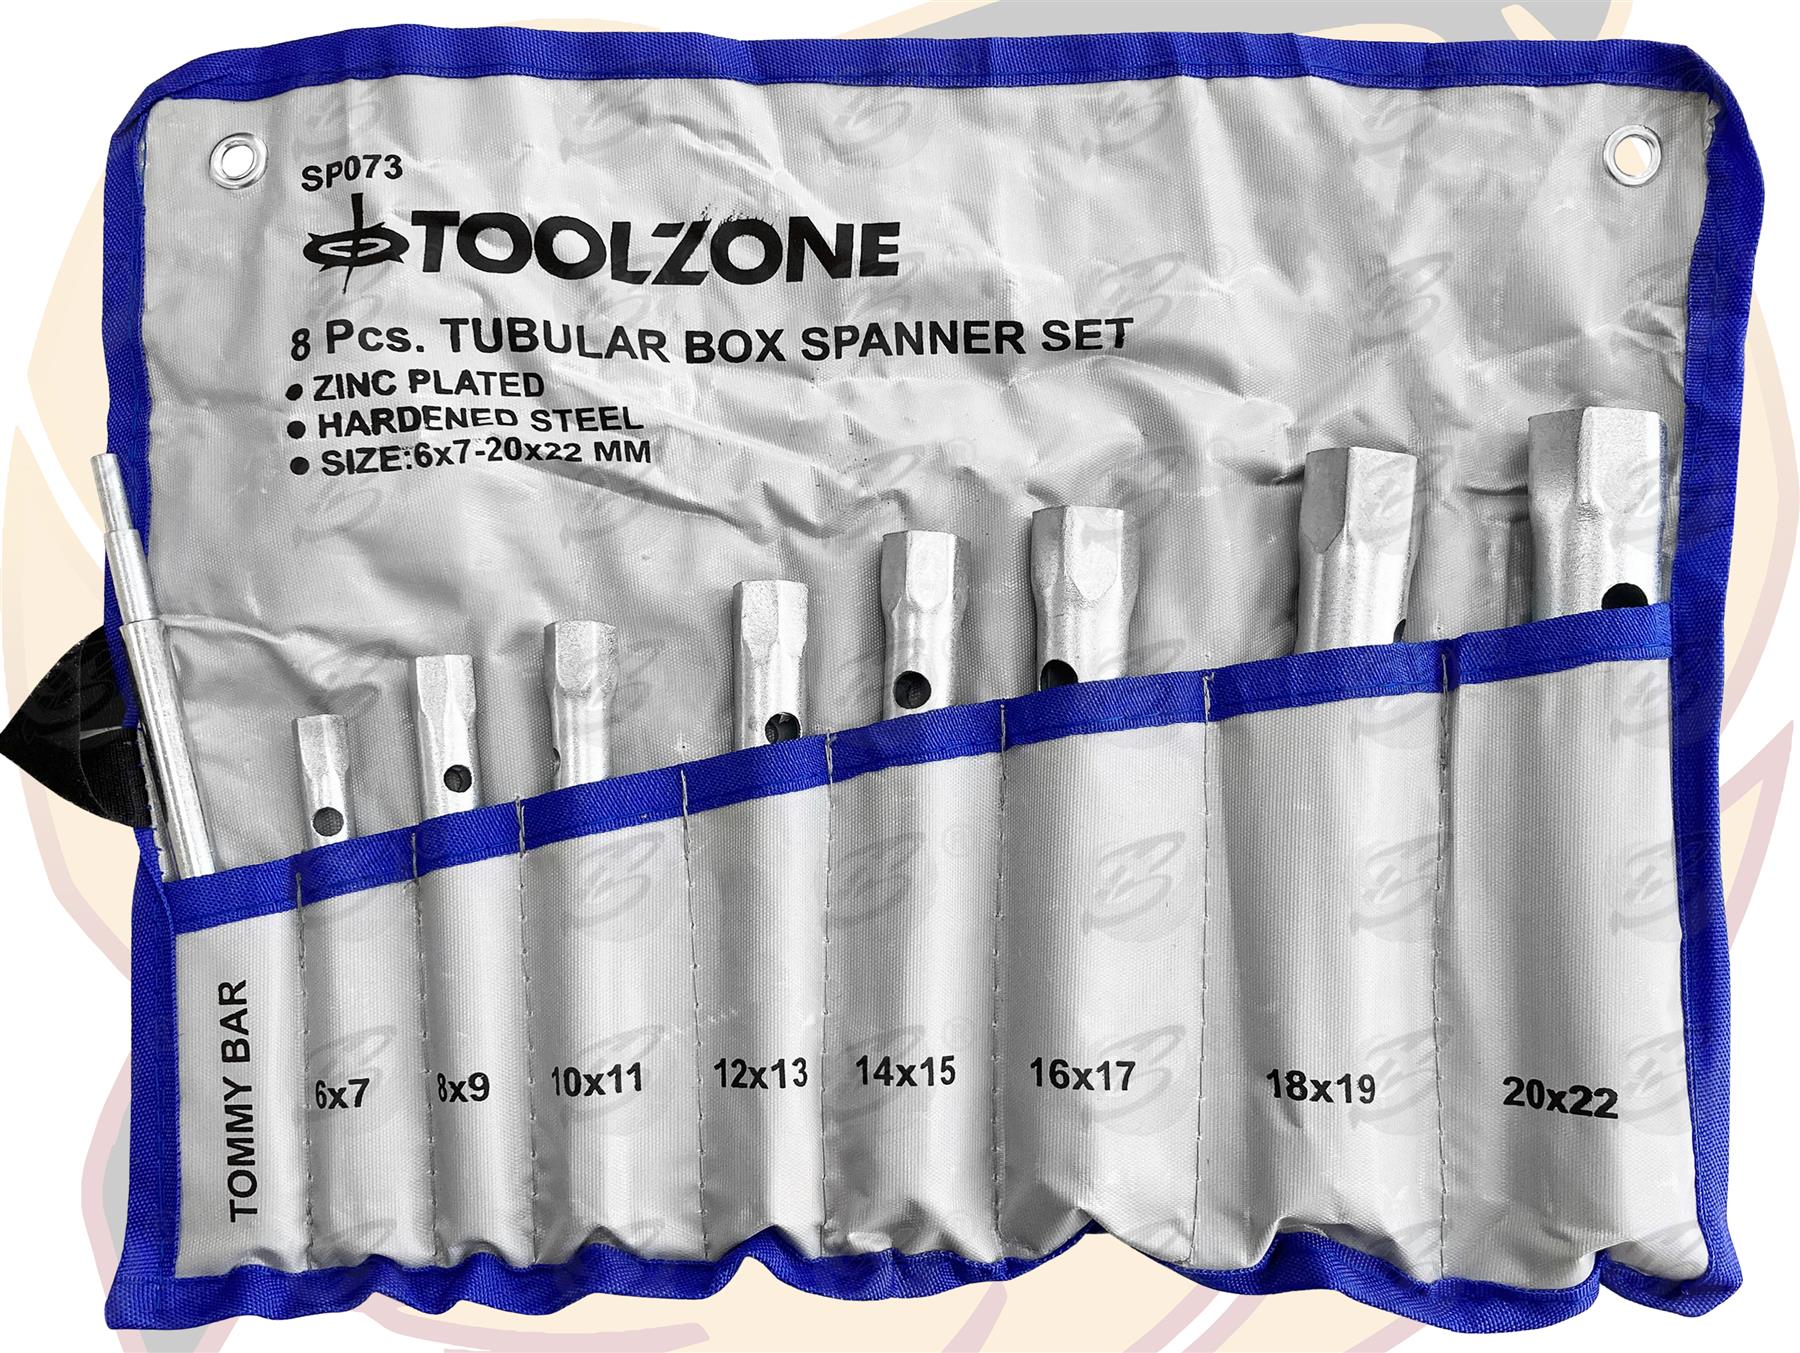 TOOLZONE 8PCS TUBULAR BOX SPANNERS 6MM - 22MM